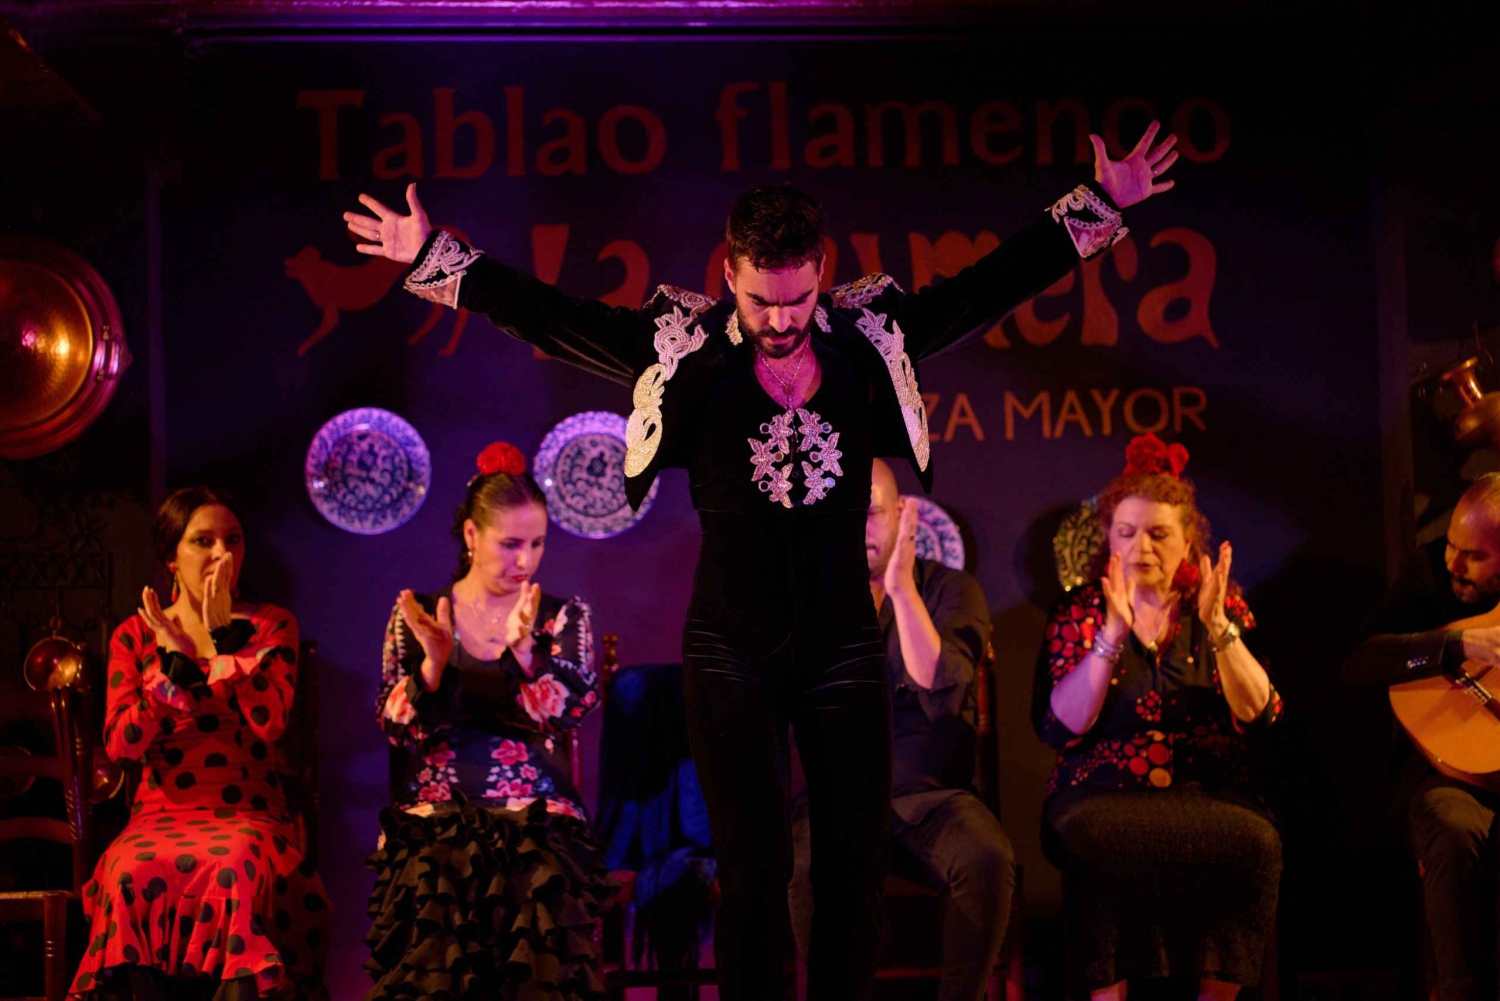 Madrid: Flamenco Show La Quimera with Drinks & Dinner Option